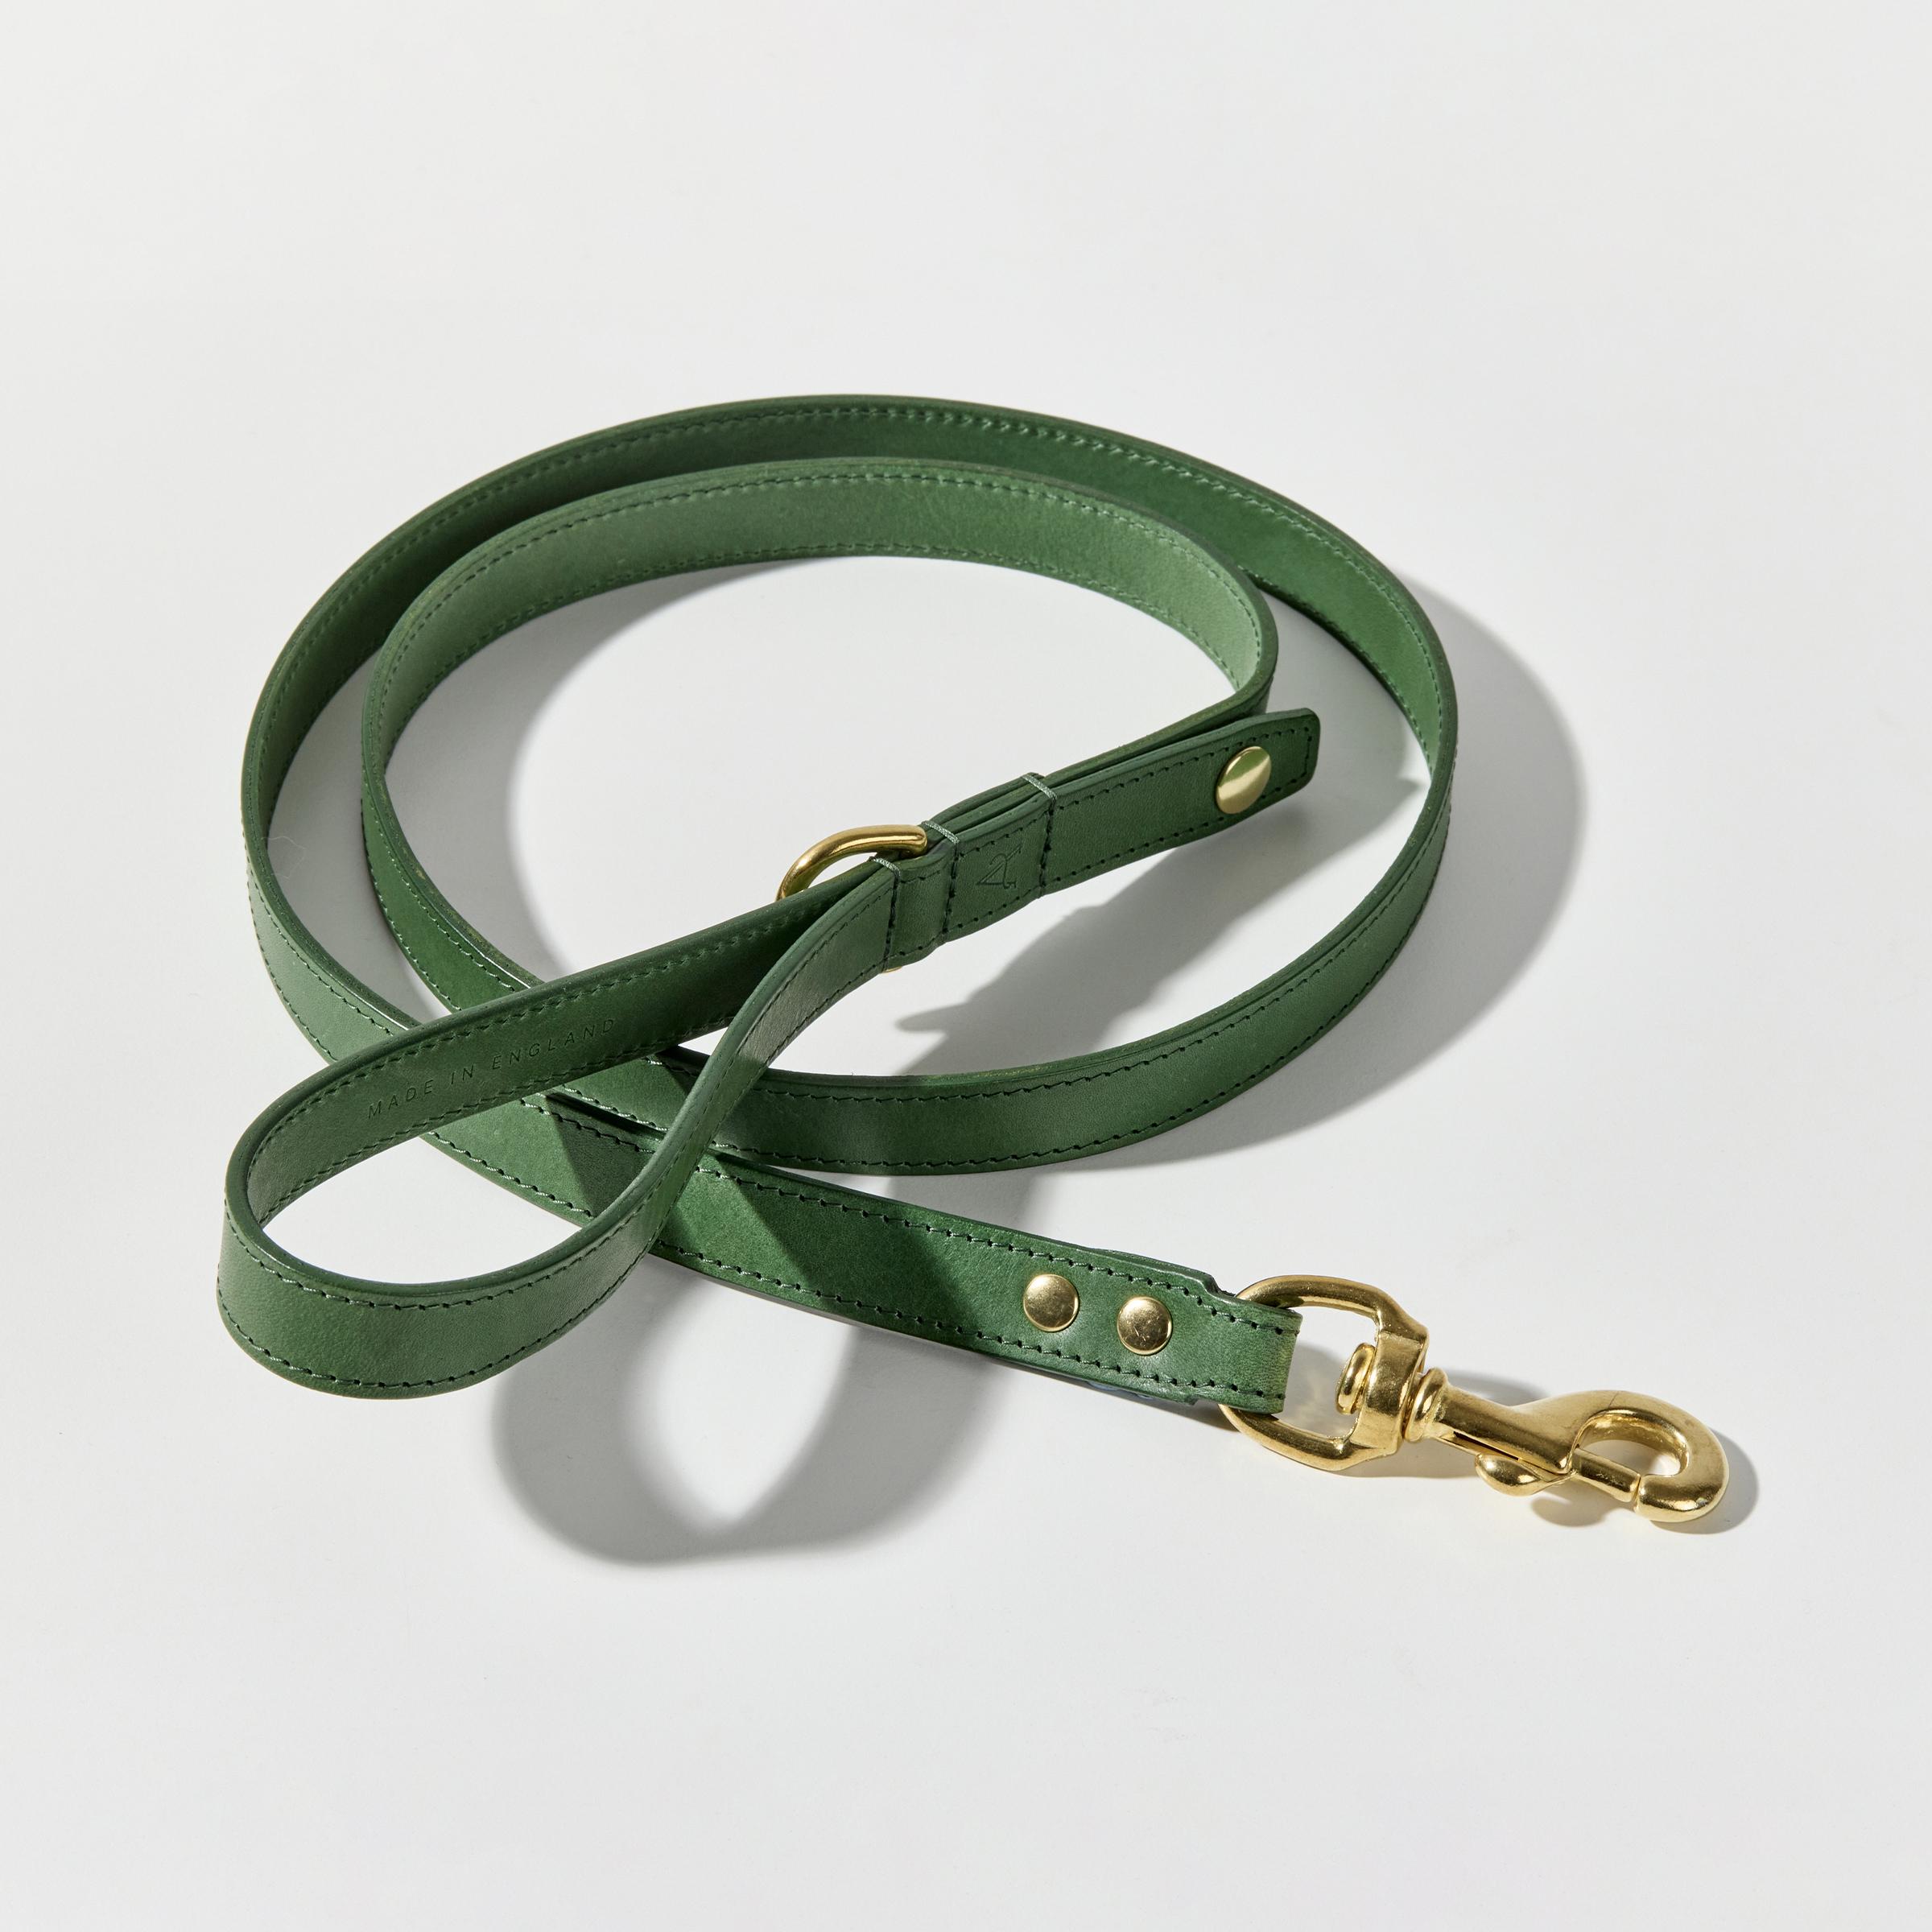 Leather Dog Leash – Green